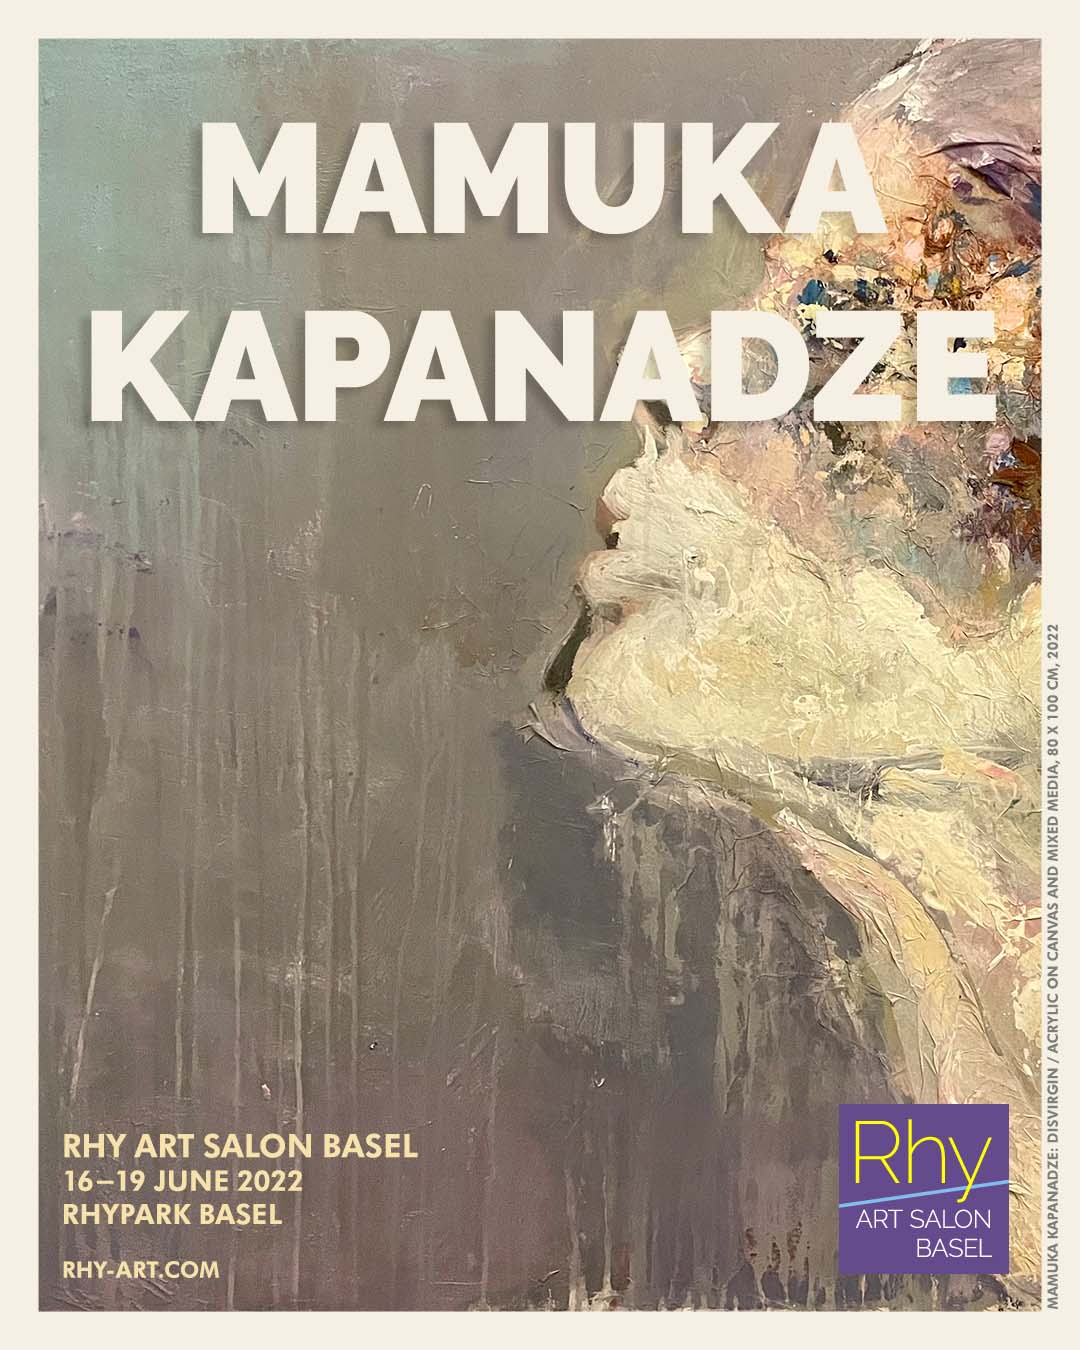 Mamuka Kapanadze at Rhy Art Salon Basel 2022